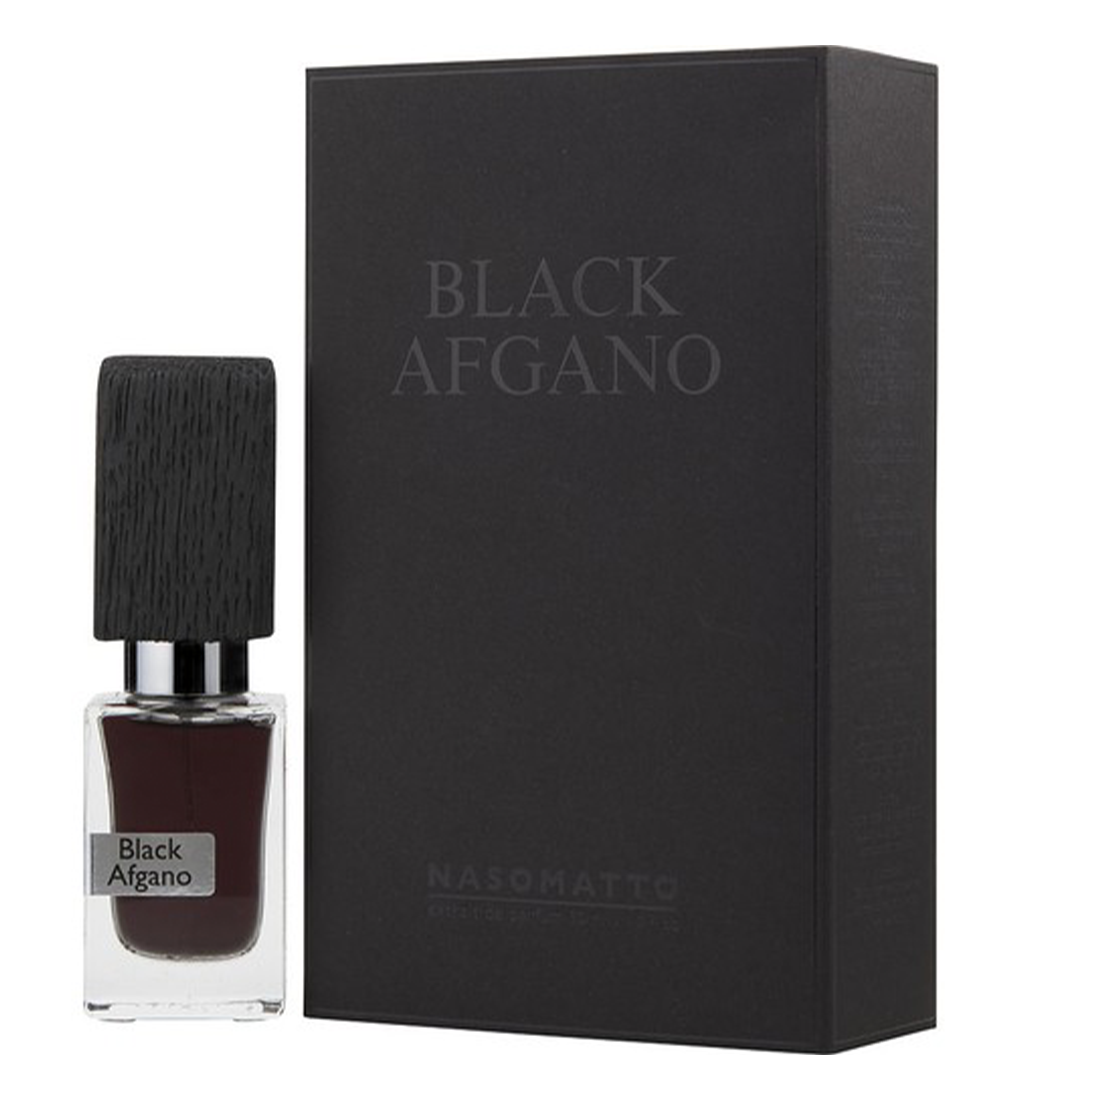 Black Afgano 30 ml EDP Parfum barbatesc